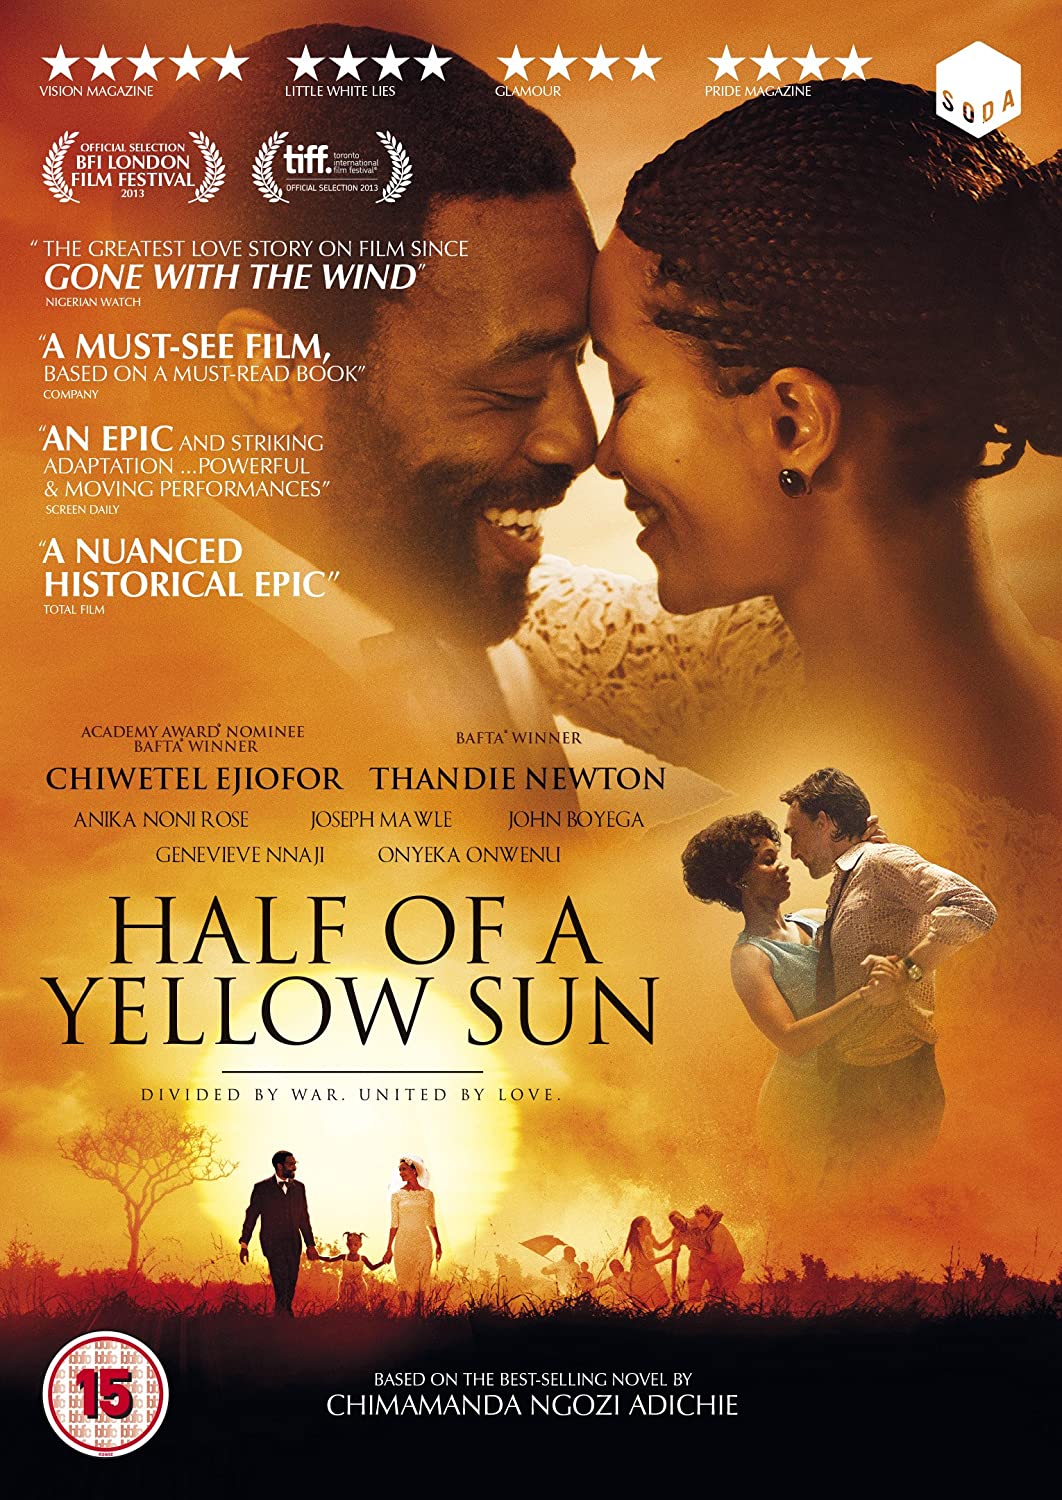 Half of a Yellow Sun [2013] - Drama [DVD]